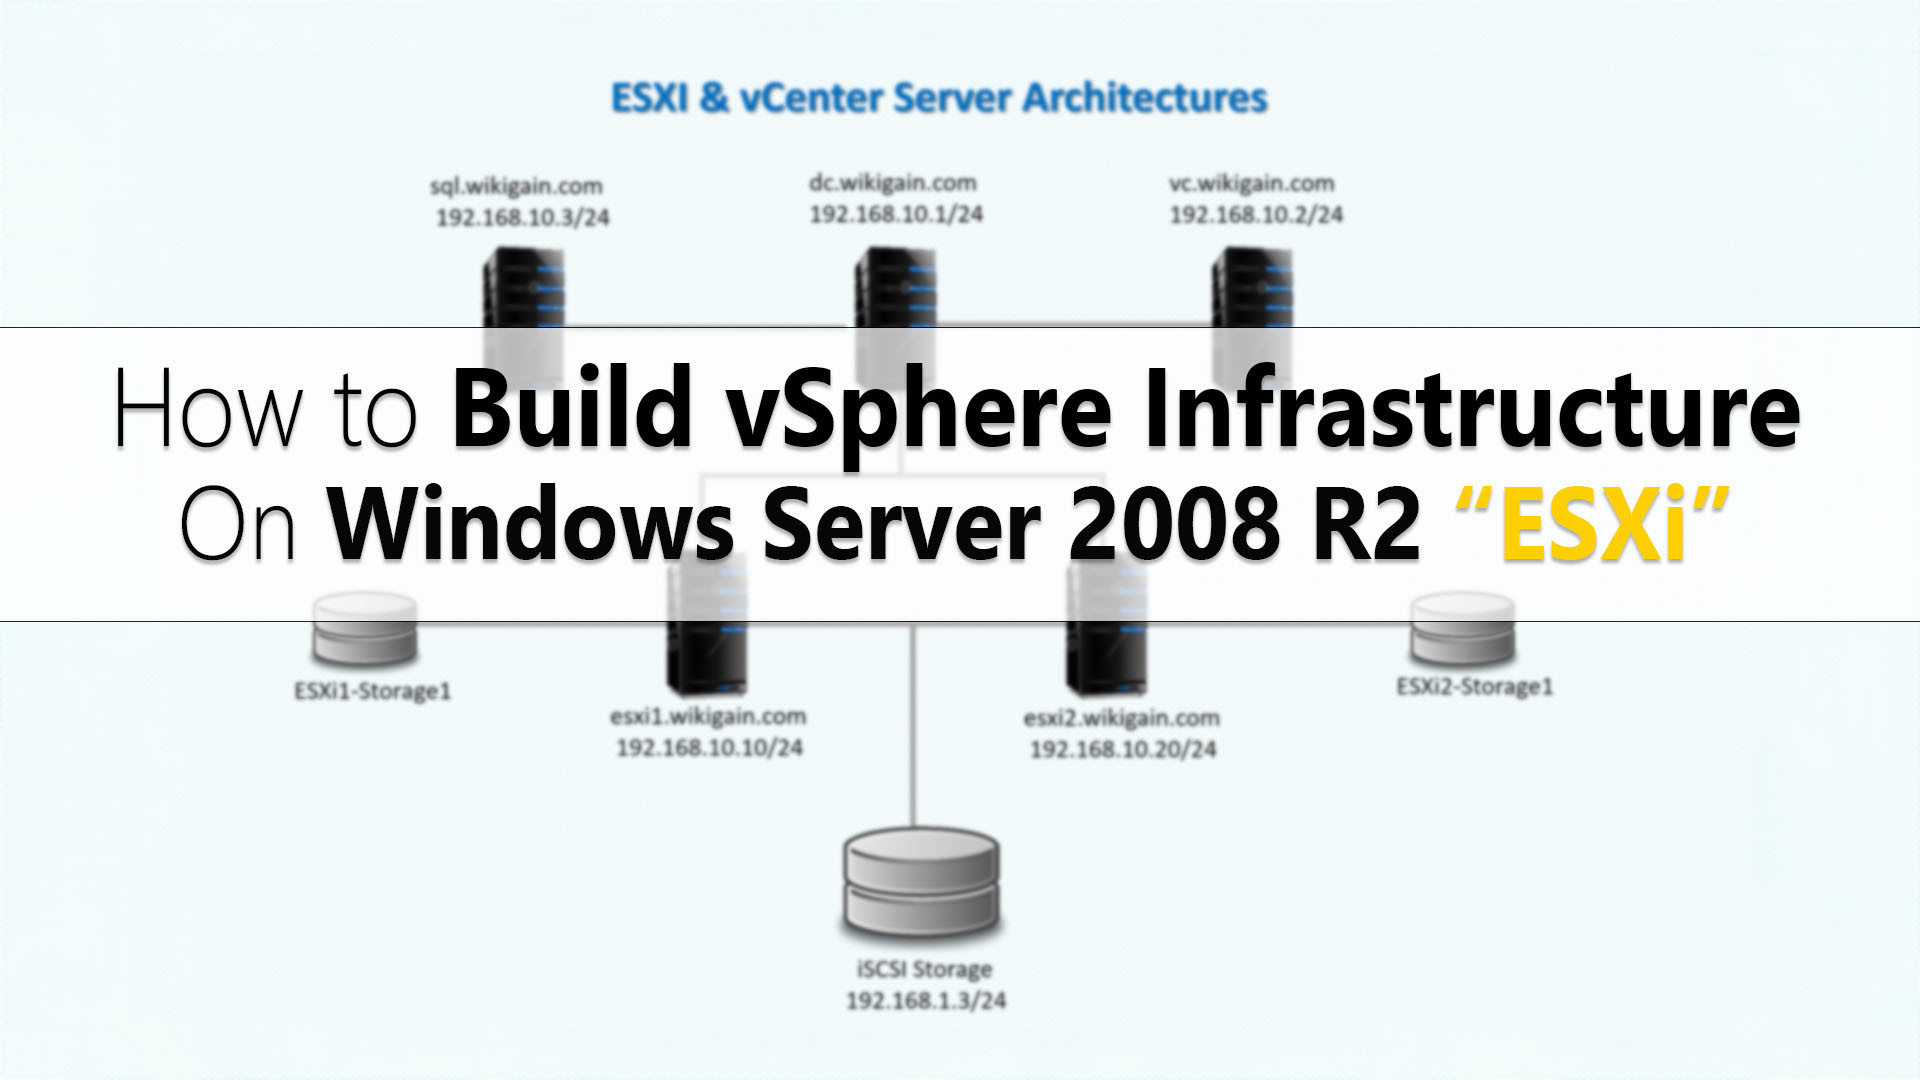 windows server 2008 r2 iso download for vmware workstation